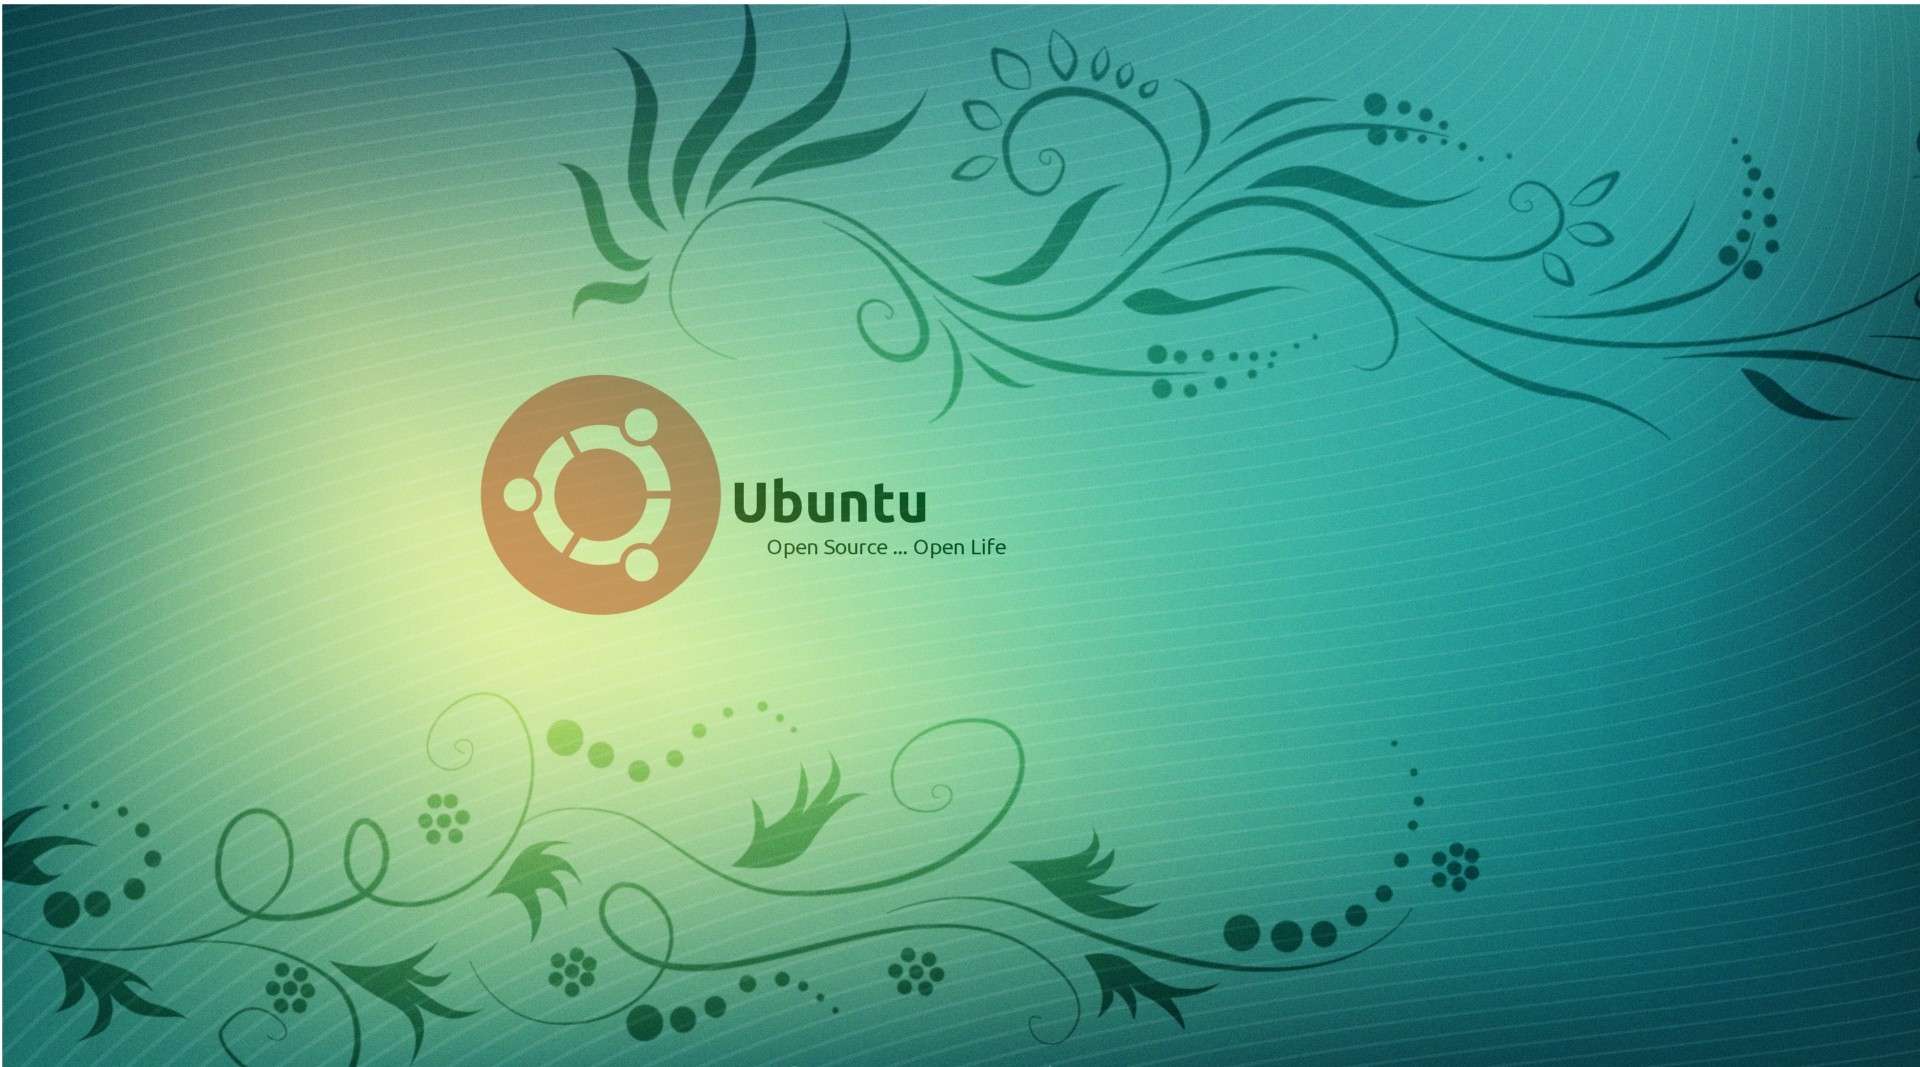 خلفية  Ubuntu open souce open life Ubuntu10